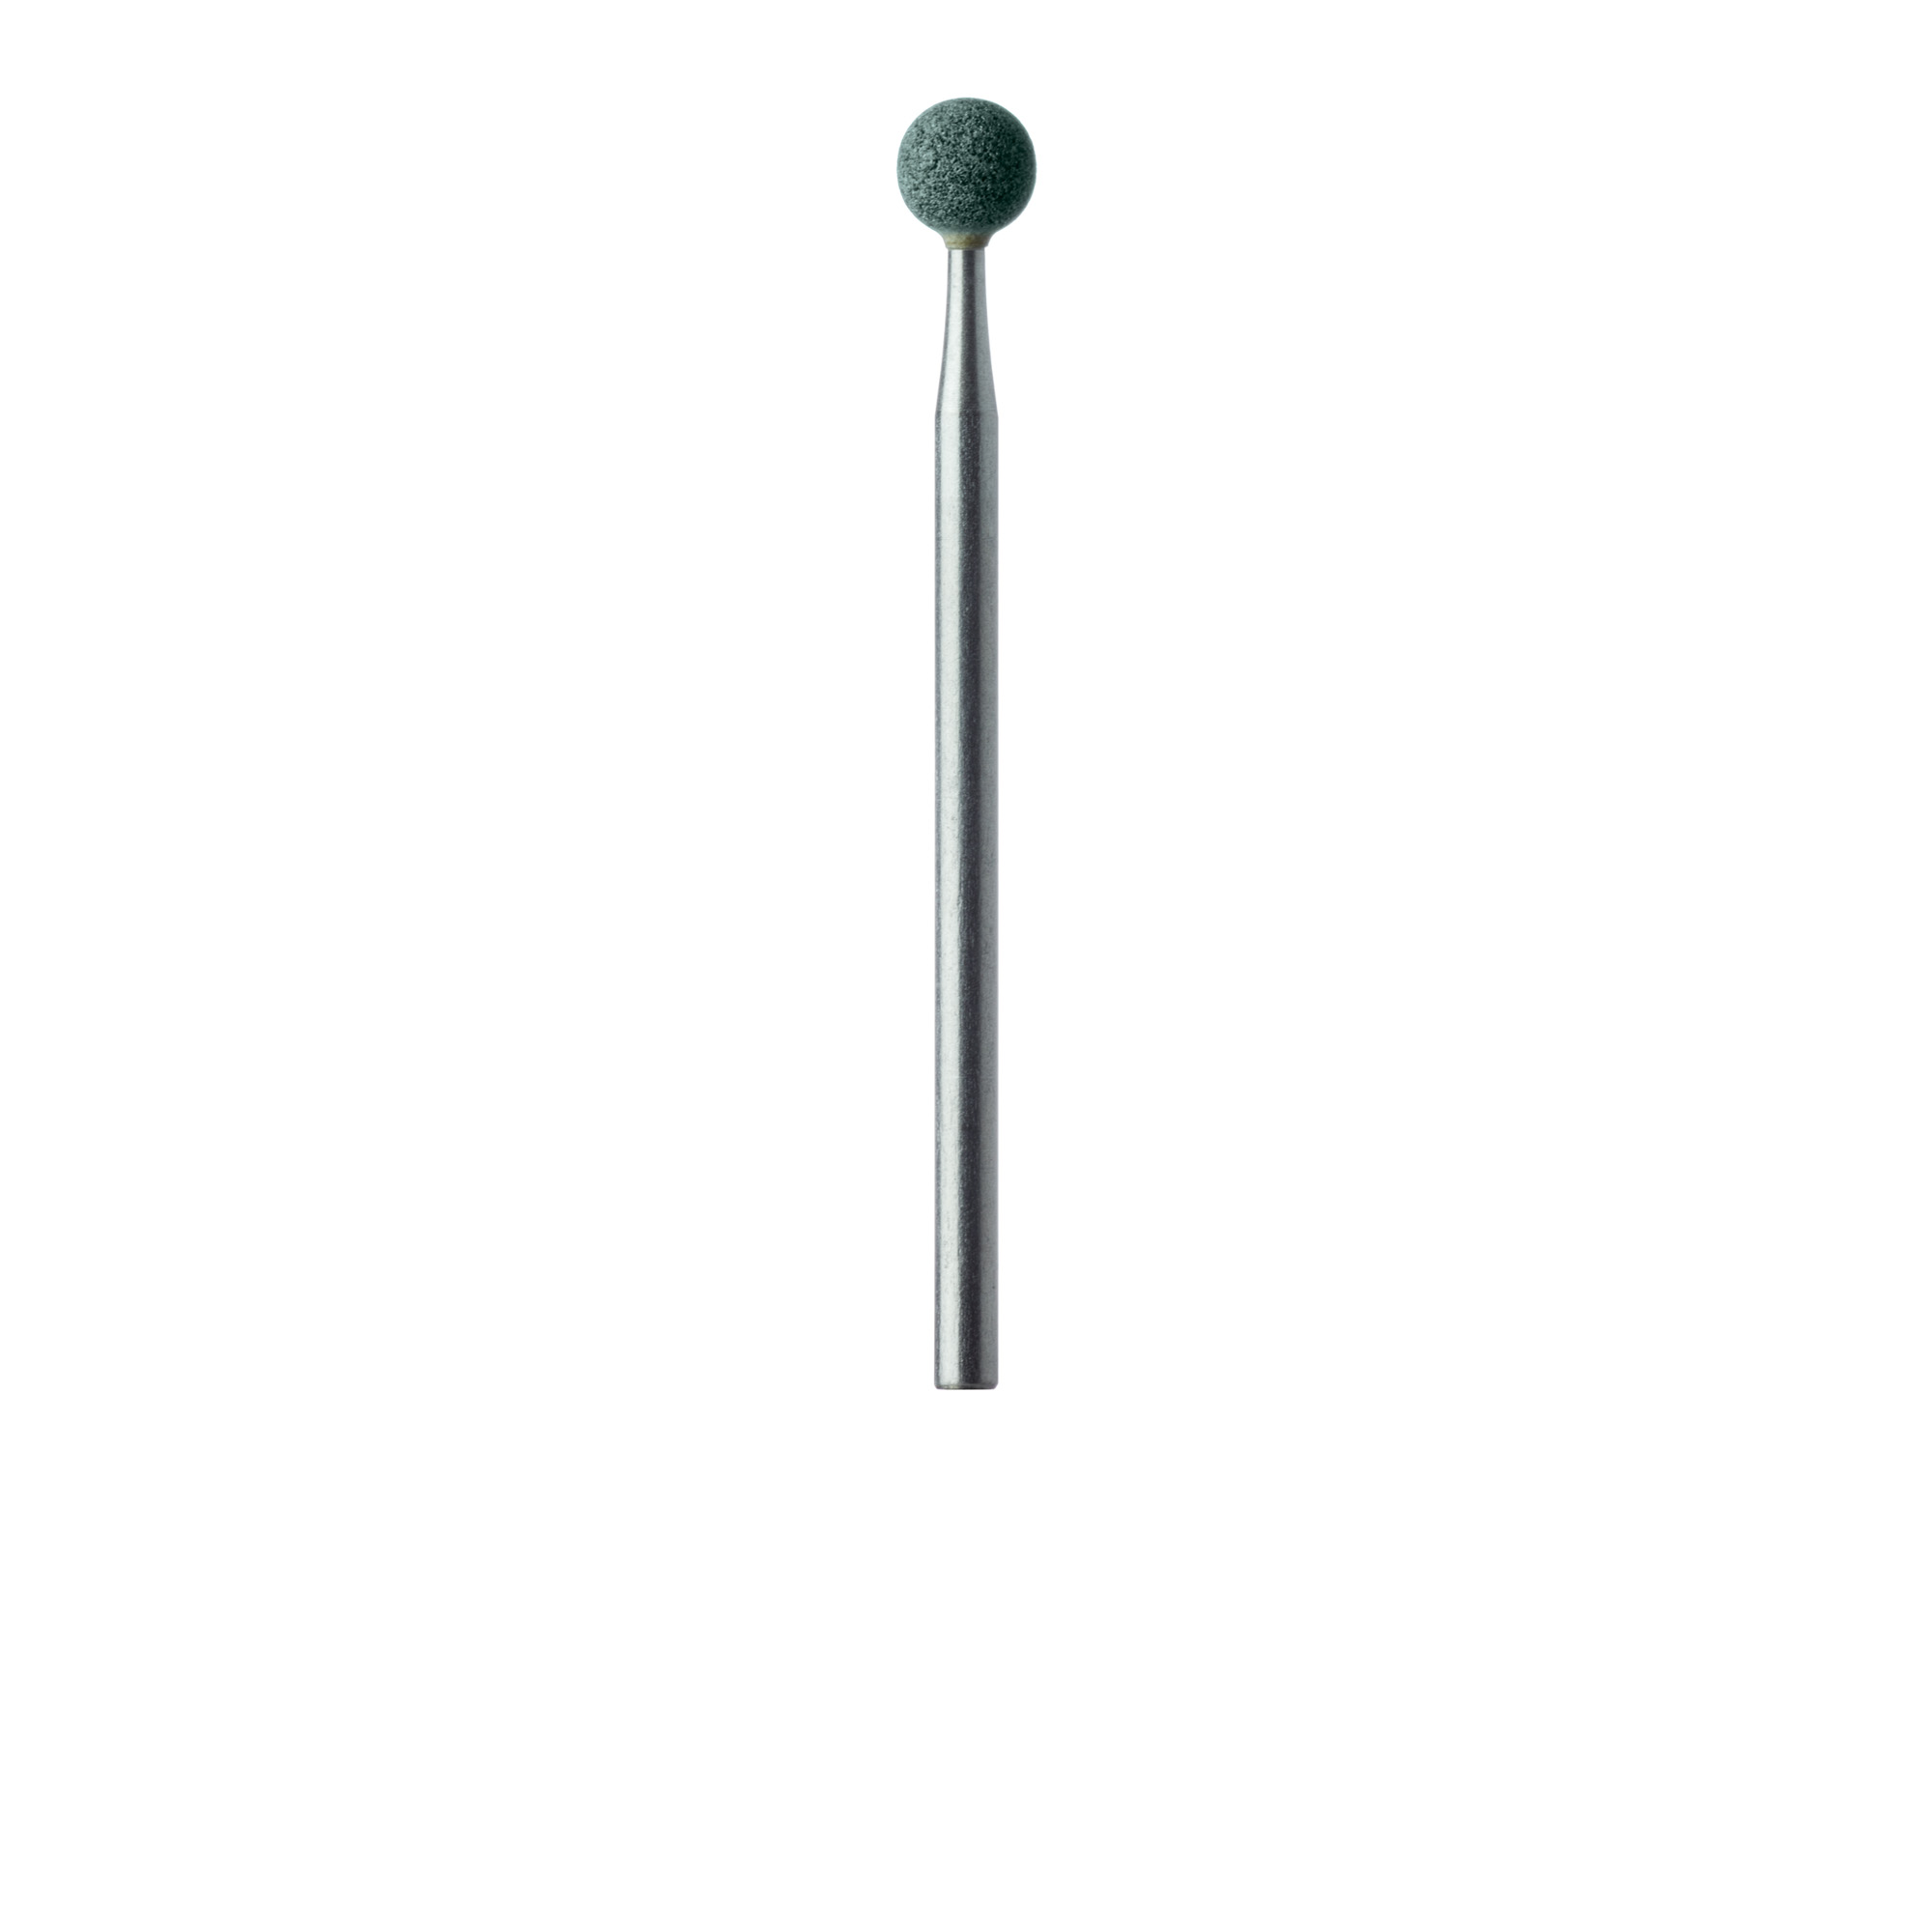 603-050-HP-GRN Abrasive, Green, Round, 5mm Ø, Medium, HP